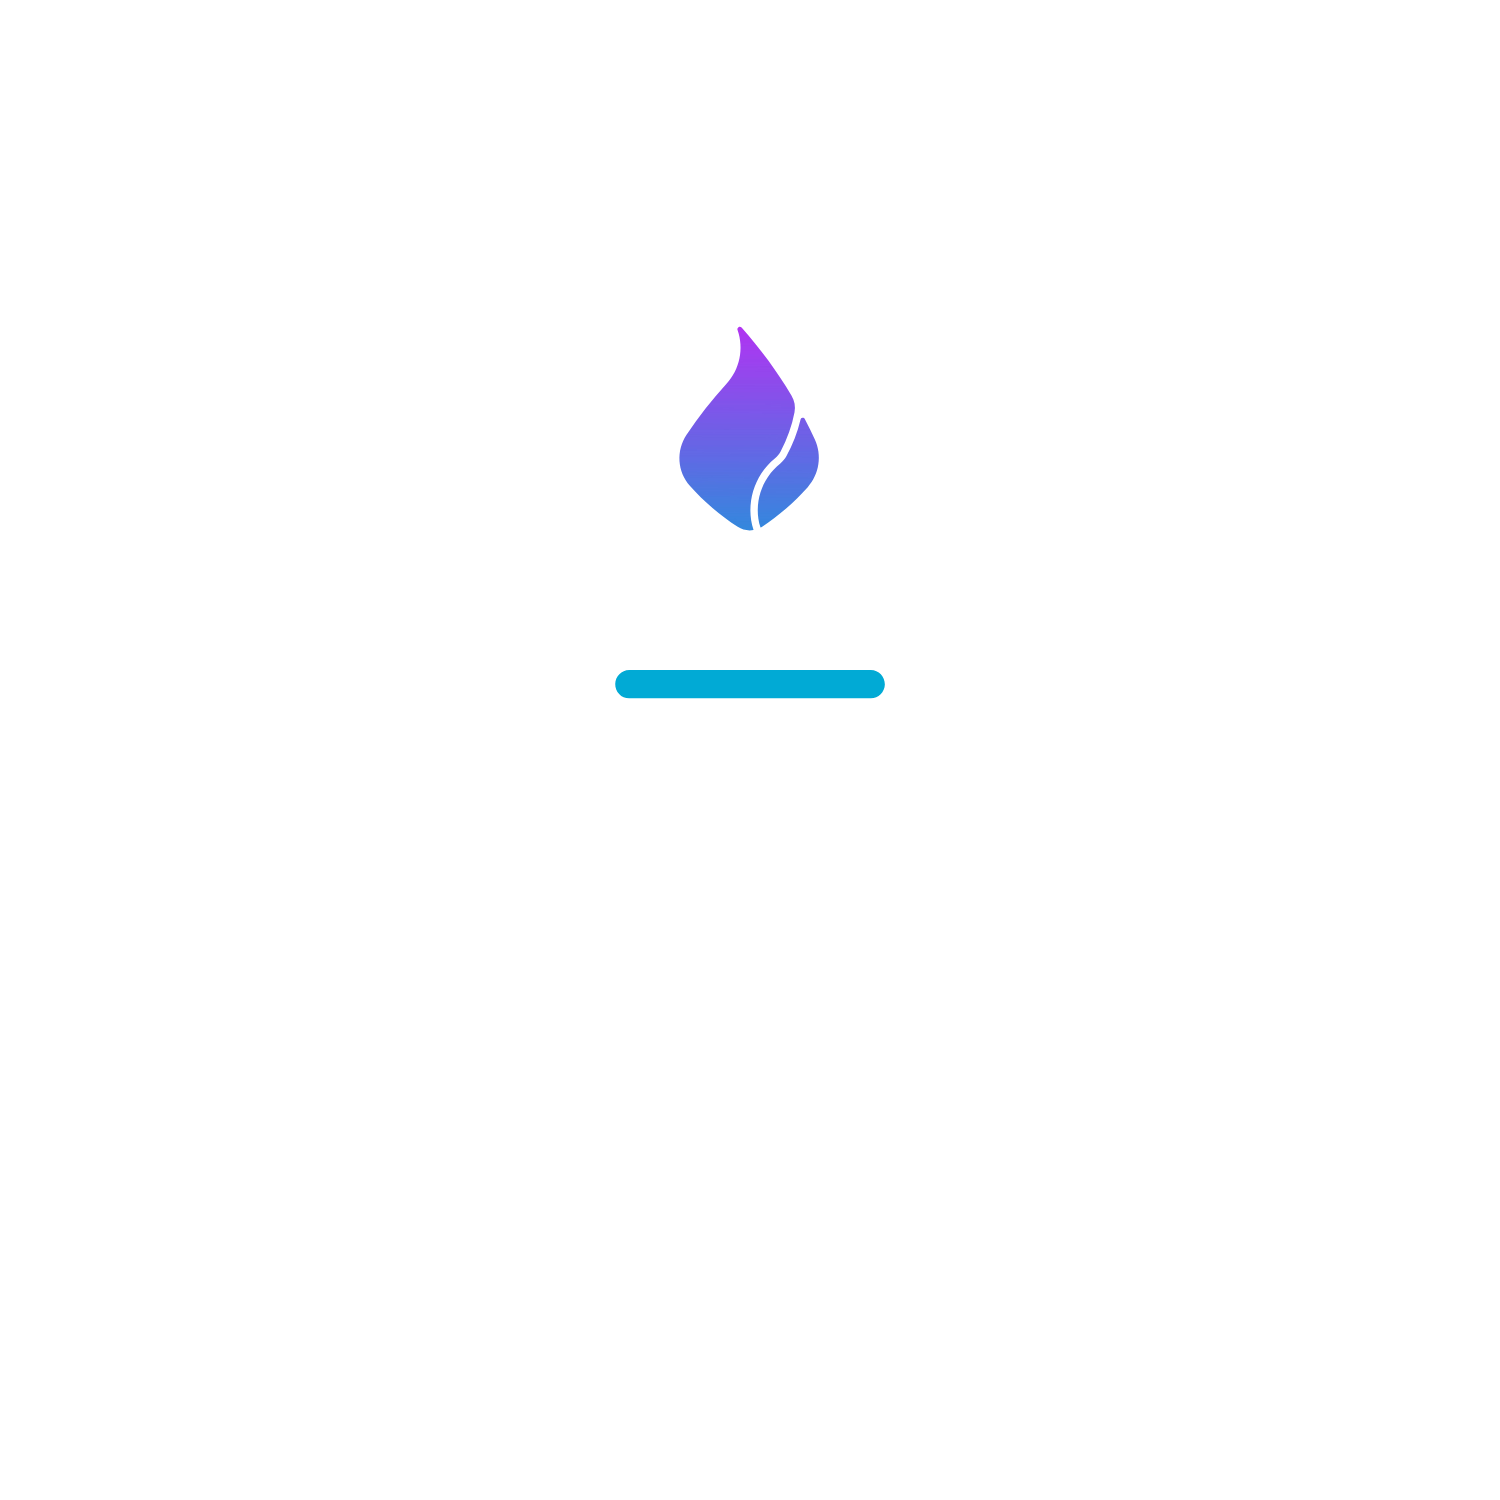 Central Heating Maintenance (Oxfordshire) Ltd